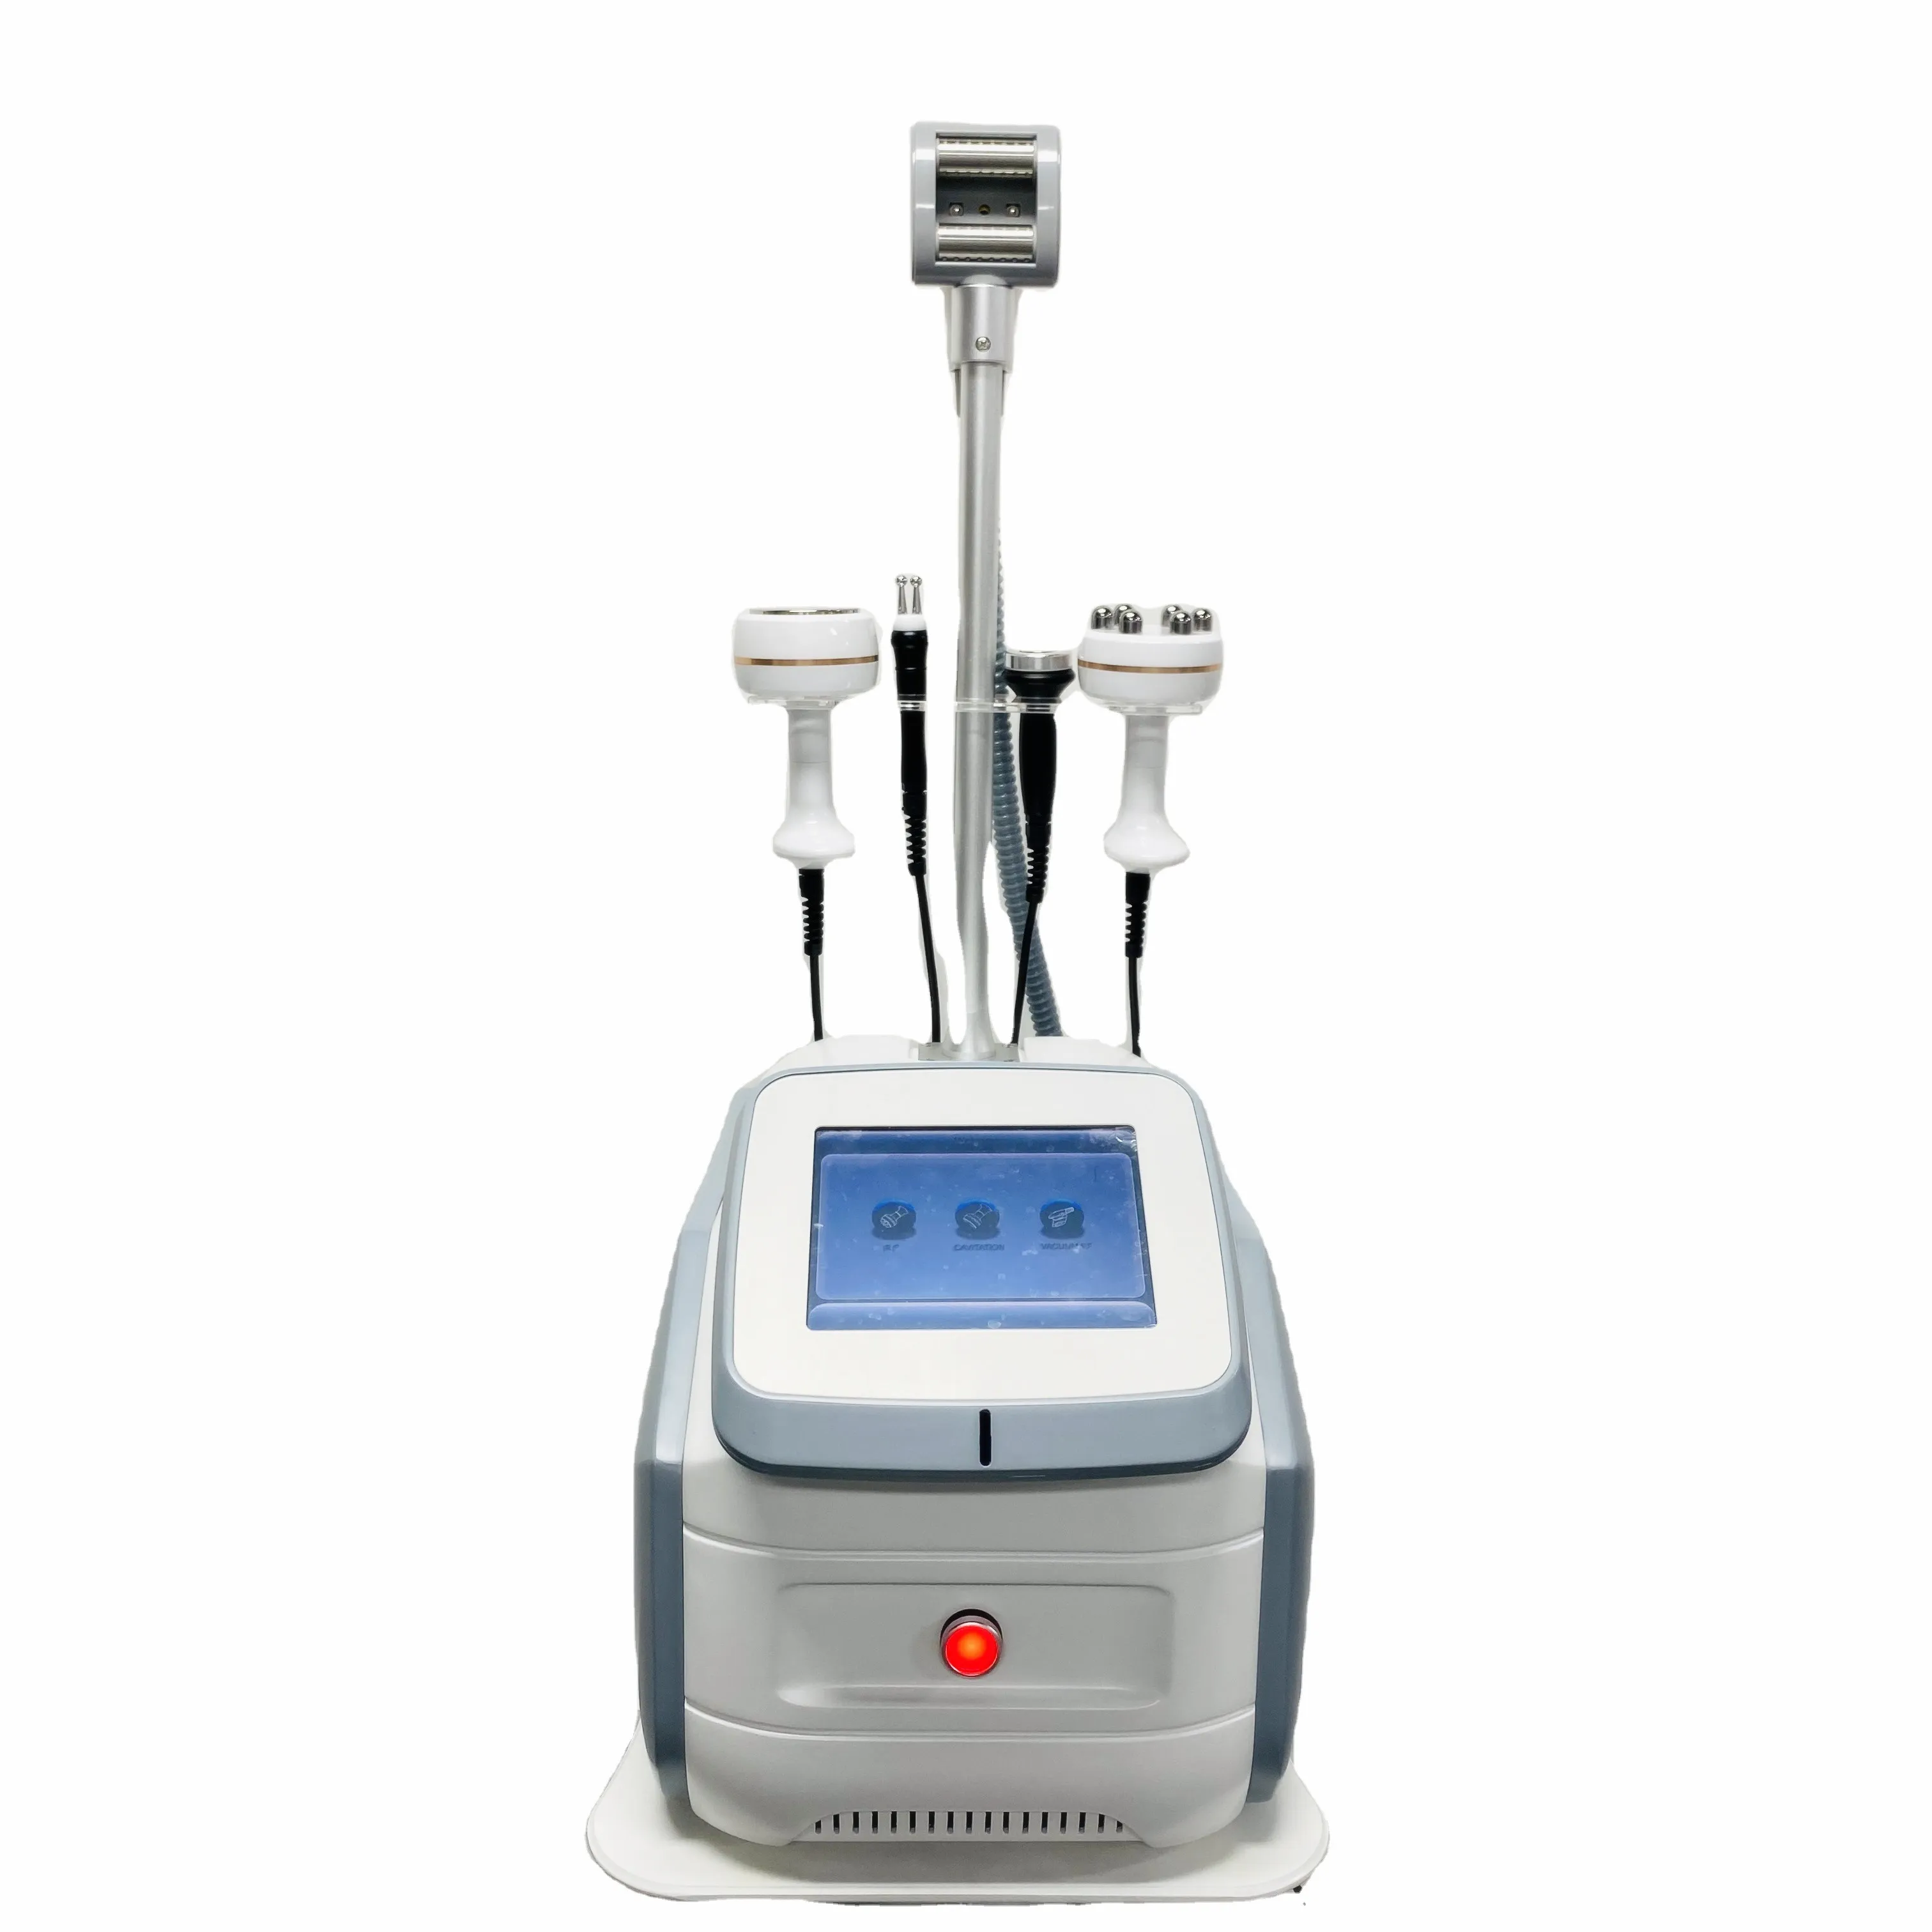 Corps sous vide rf à ultrasons Liposlim amincissant la machine de cavitation ultra lipo de liposuccion ultrasonique